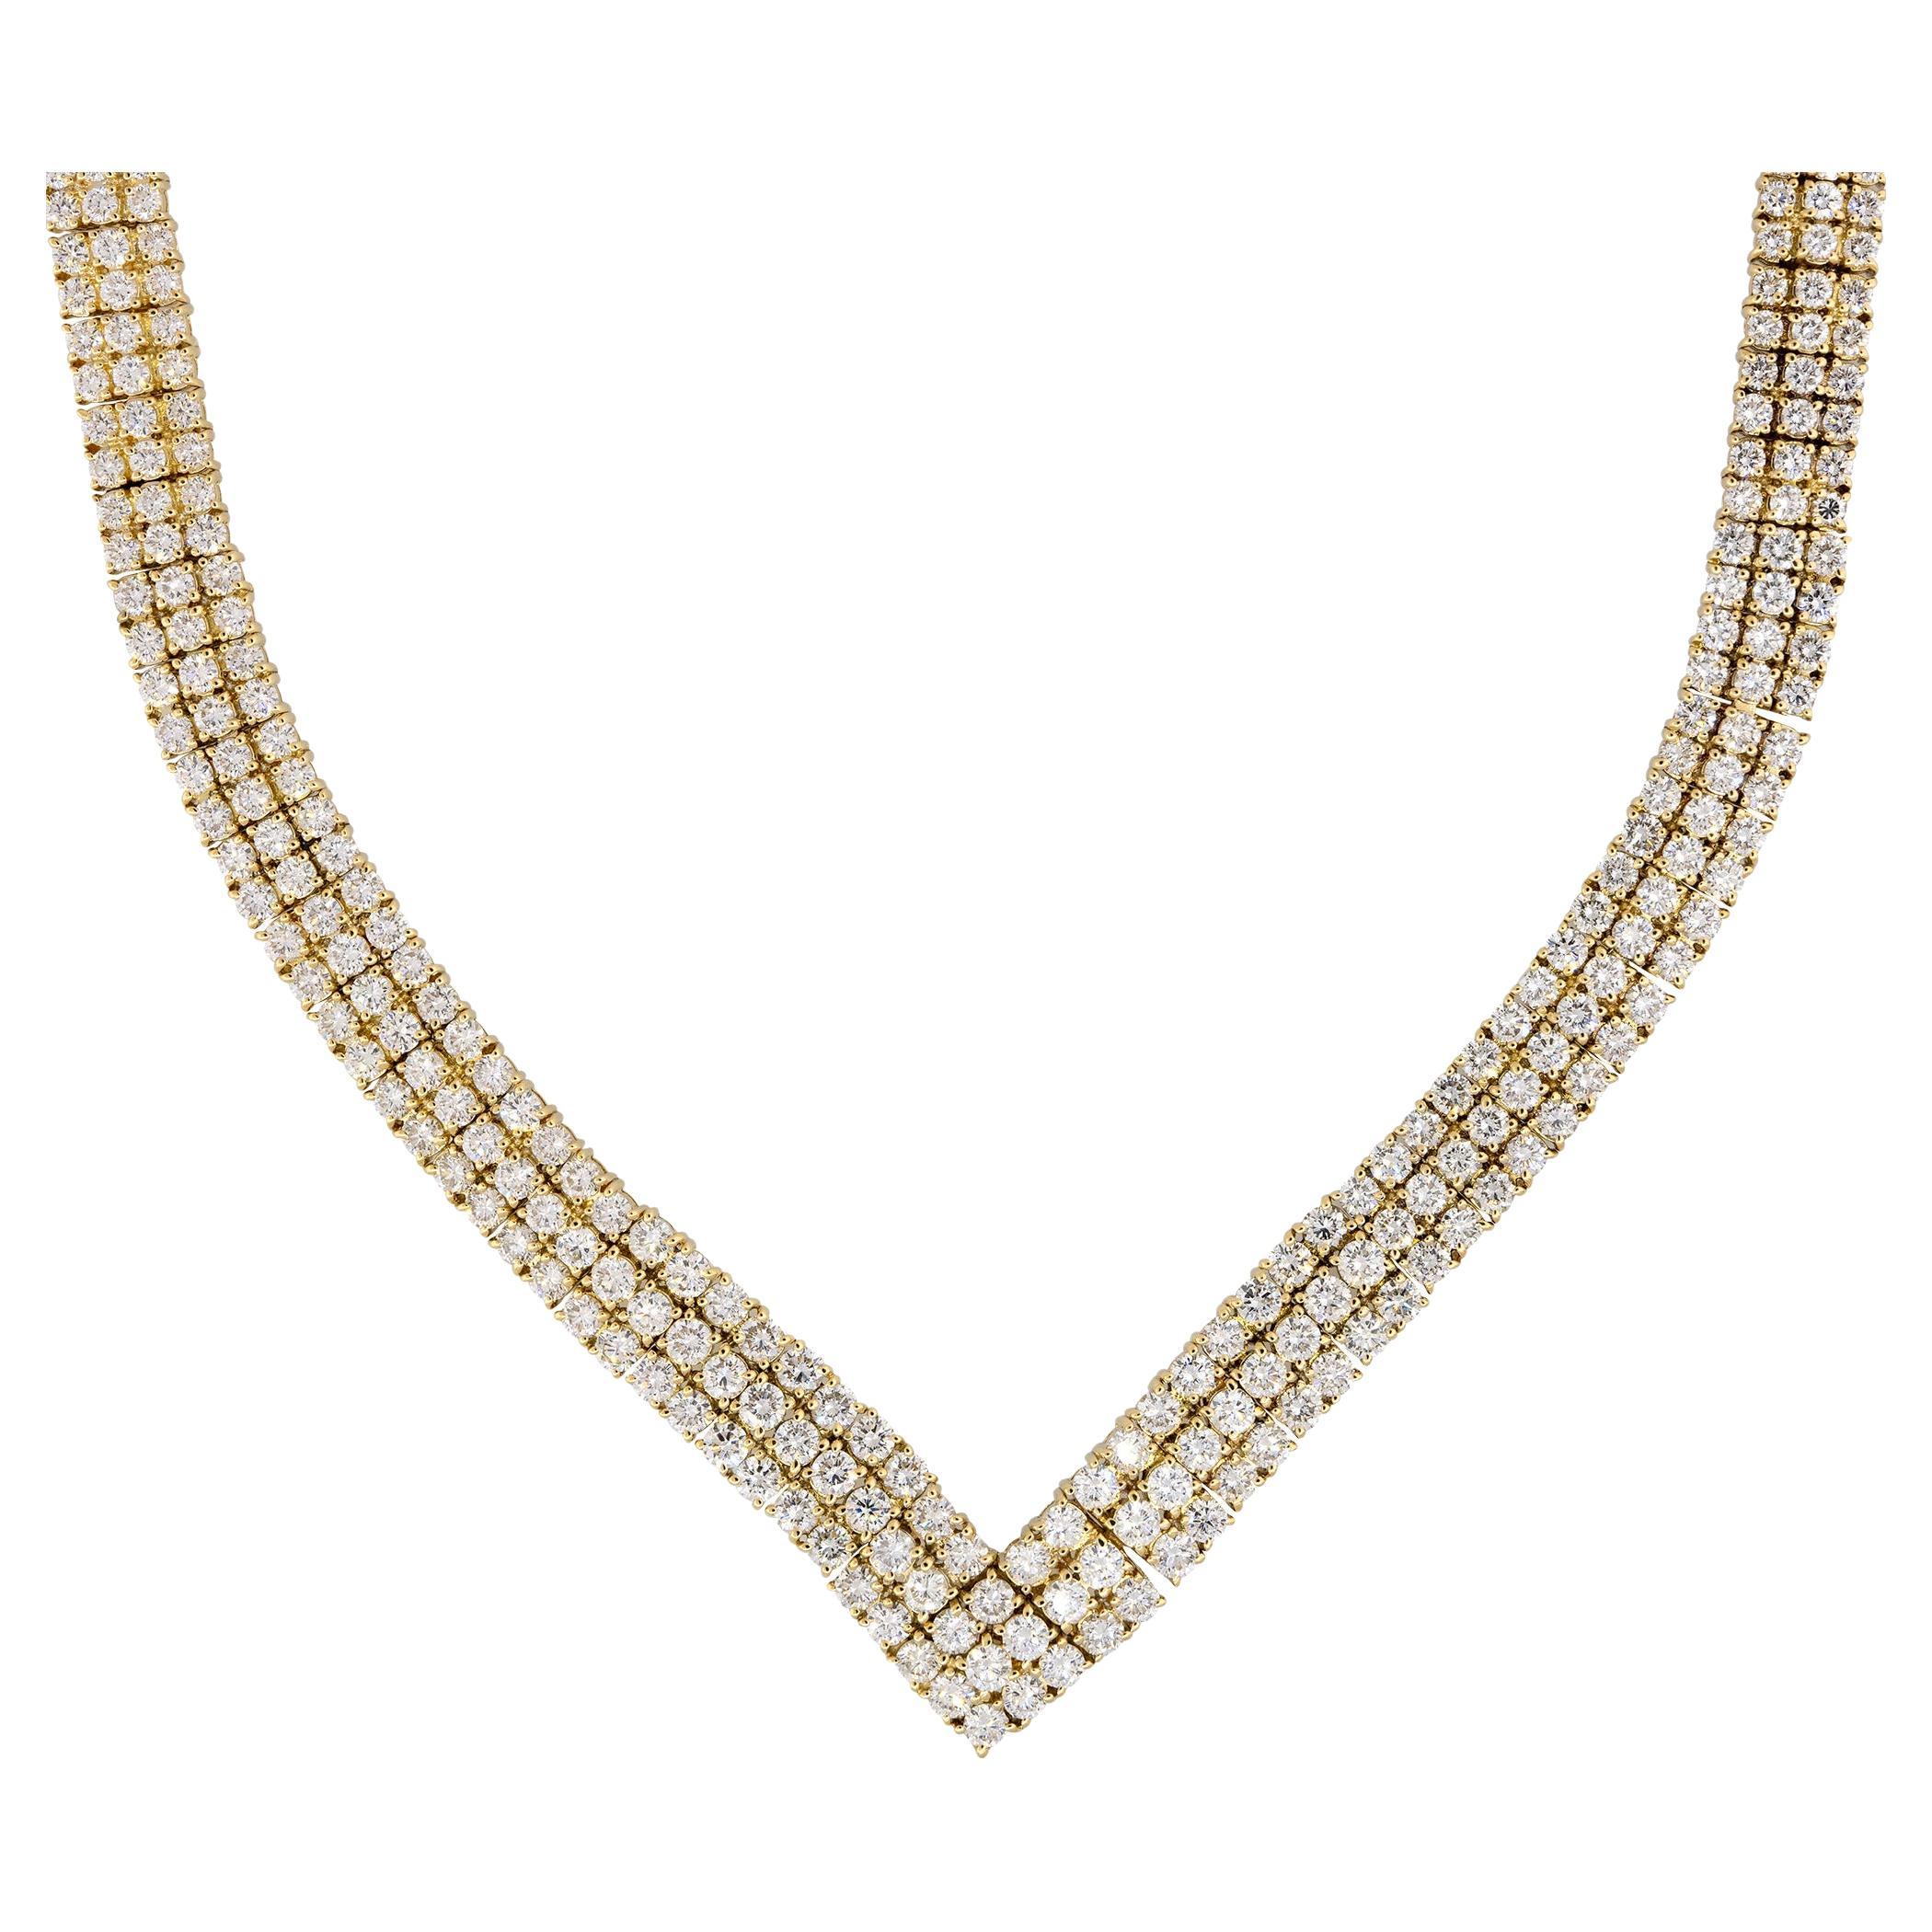 29.5 Carat Round Brilliant Cut Diamond "V" Necklace 18 Karat In Stock